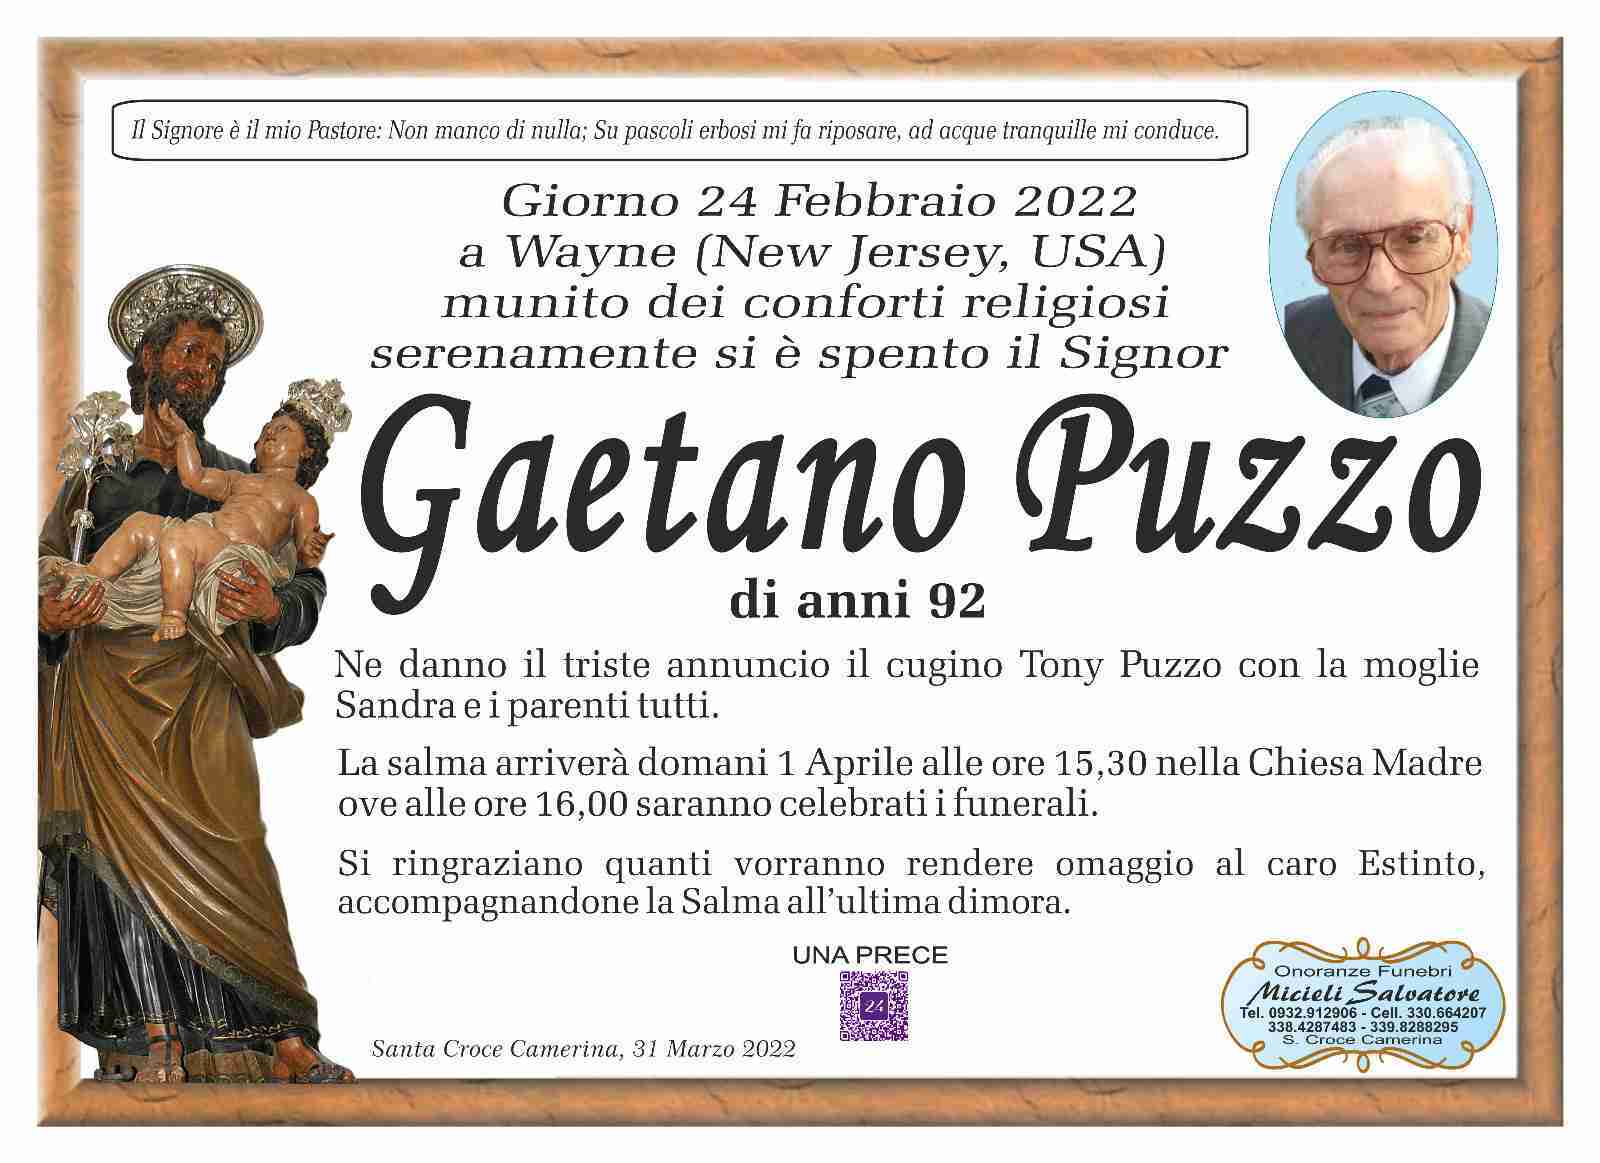 Gaetano Puzzo